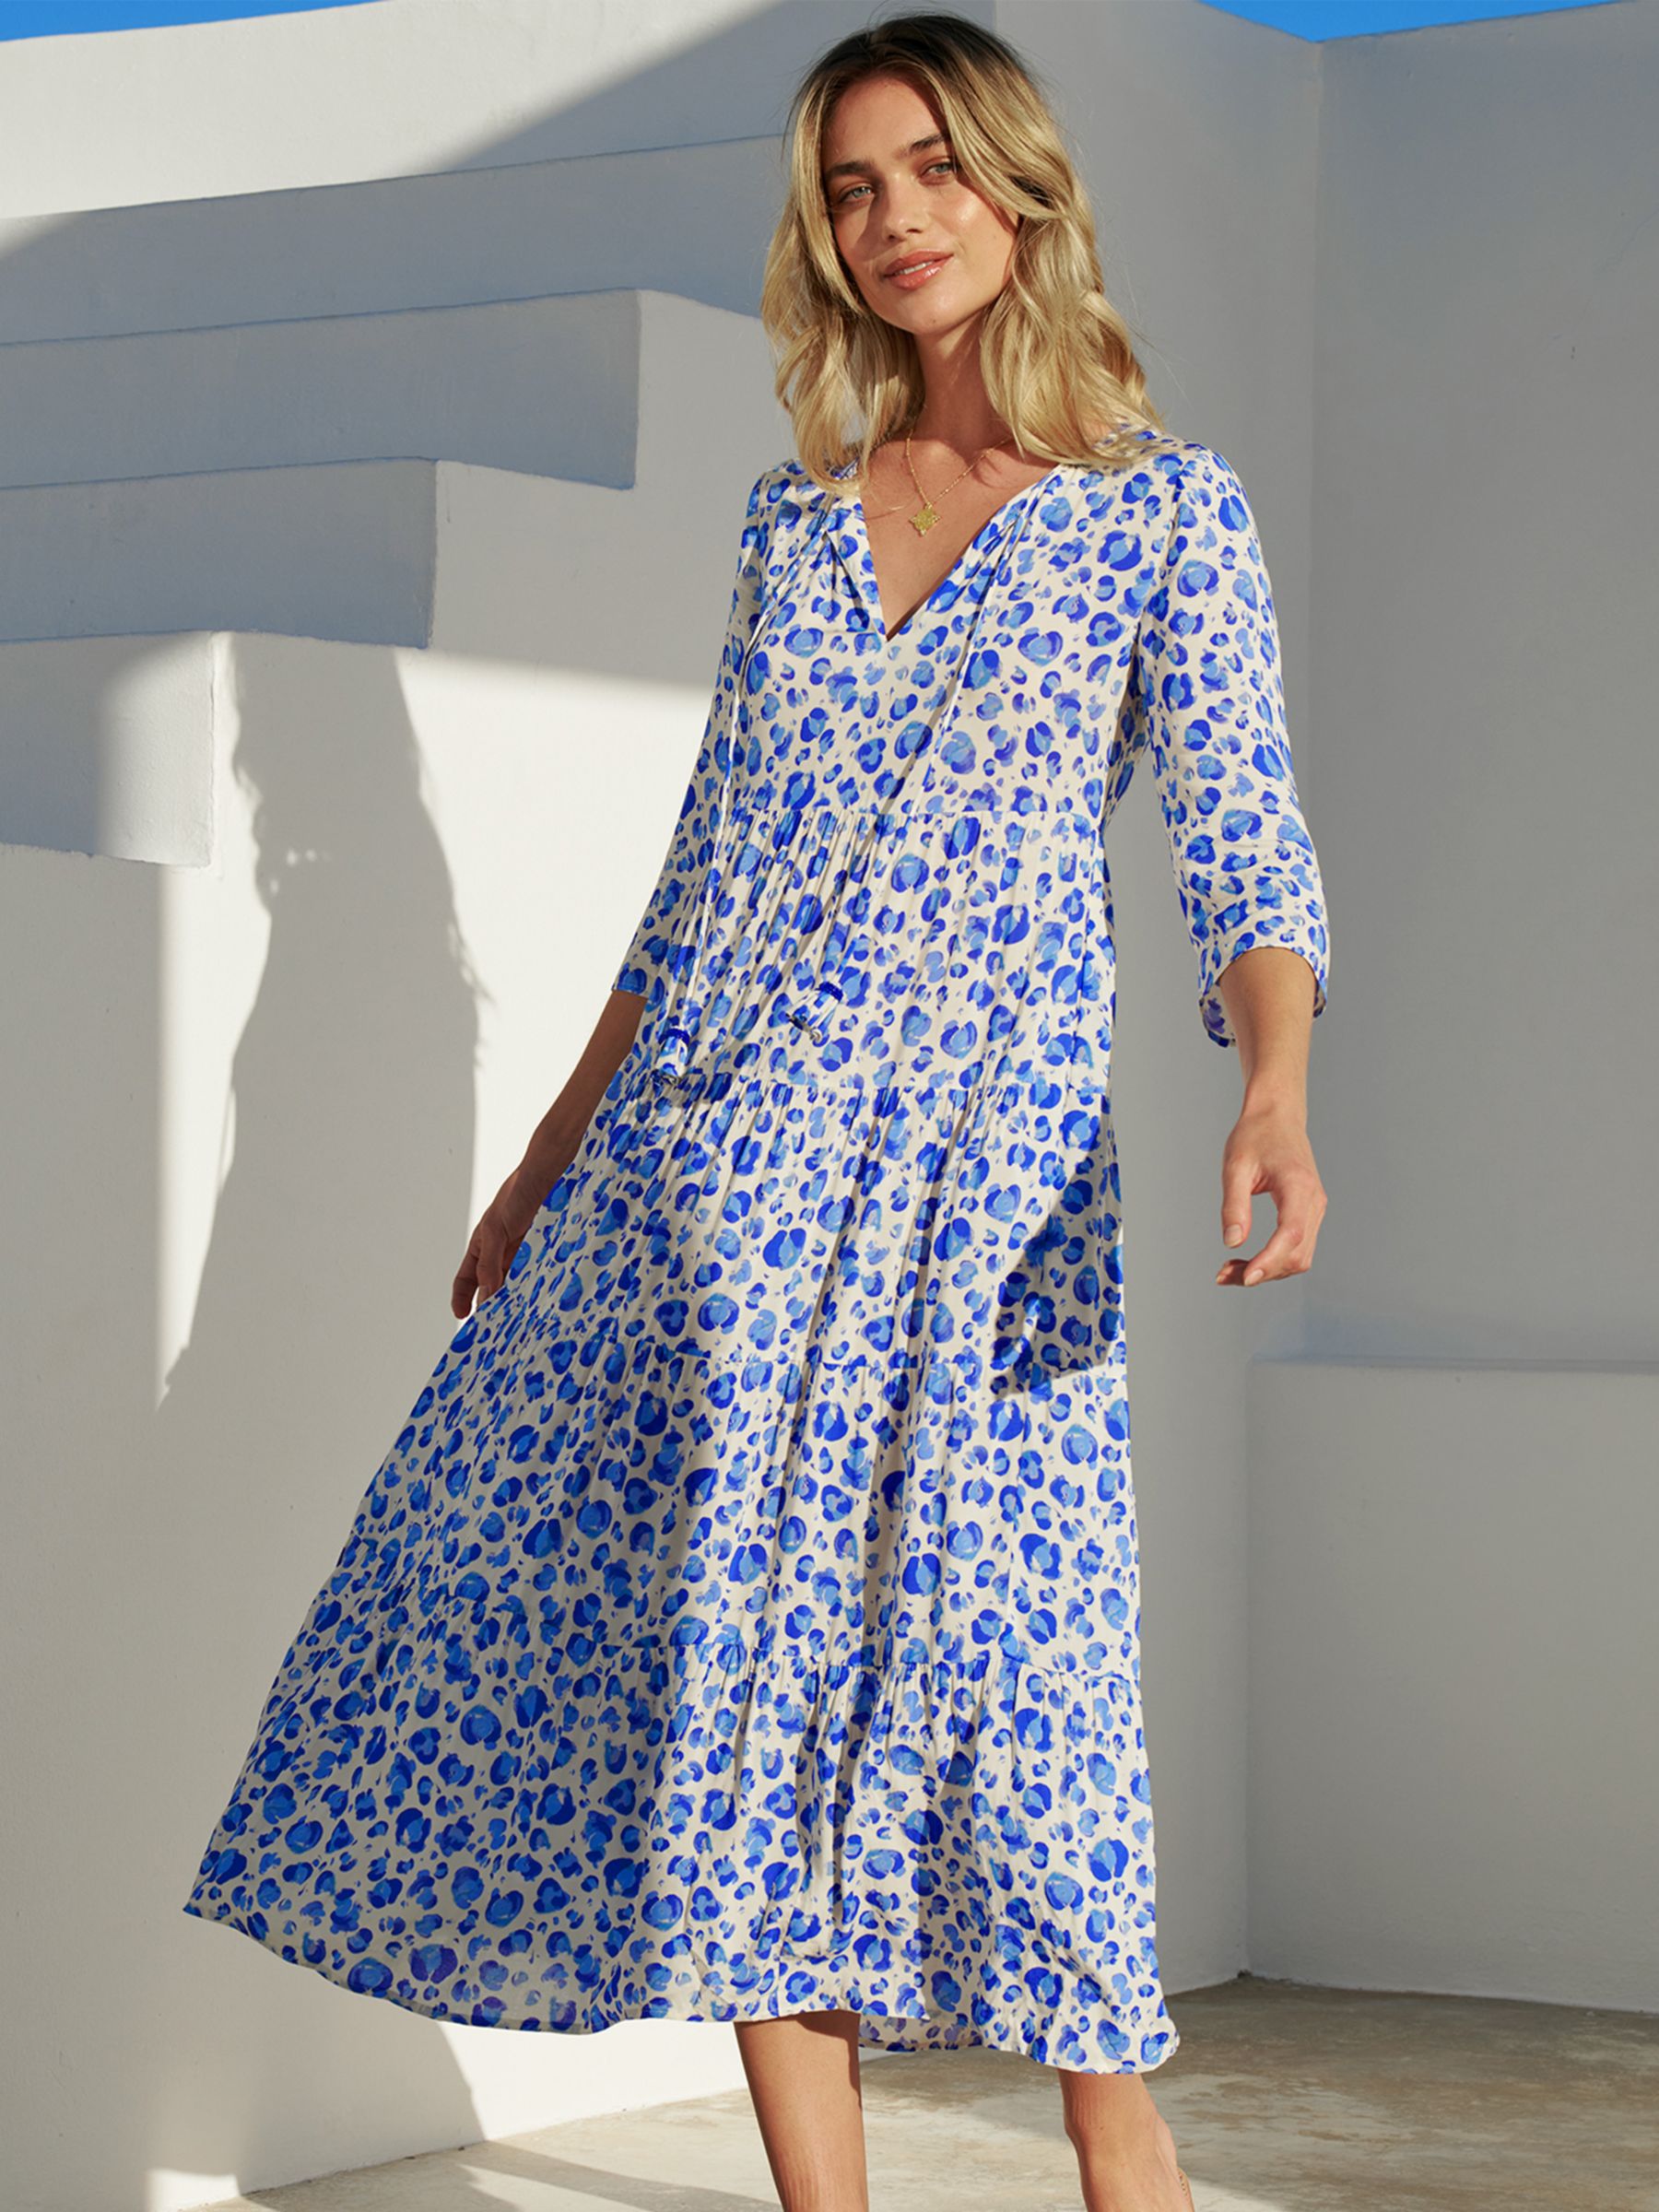 Aspiga Emma Cheetah Print Midi Dress, Cream/Blue at John Lewis & Partners